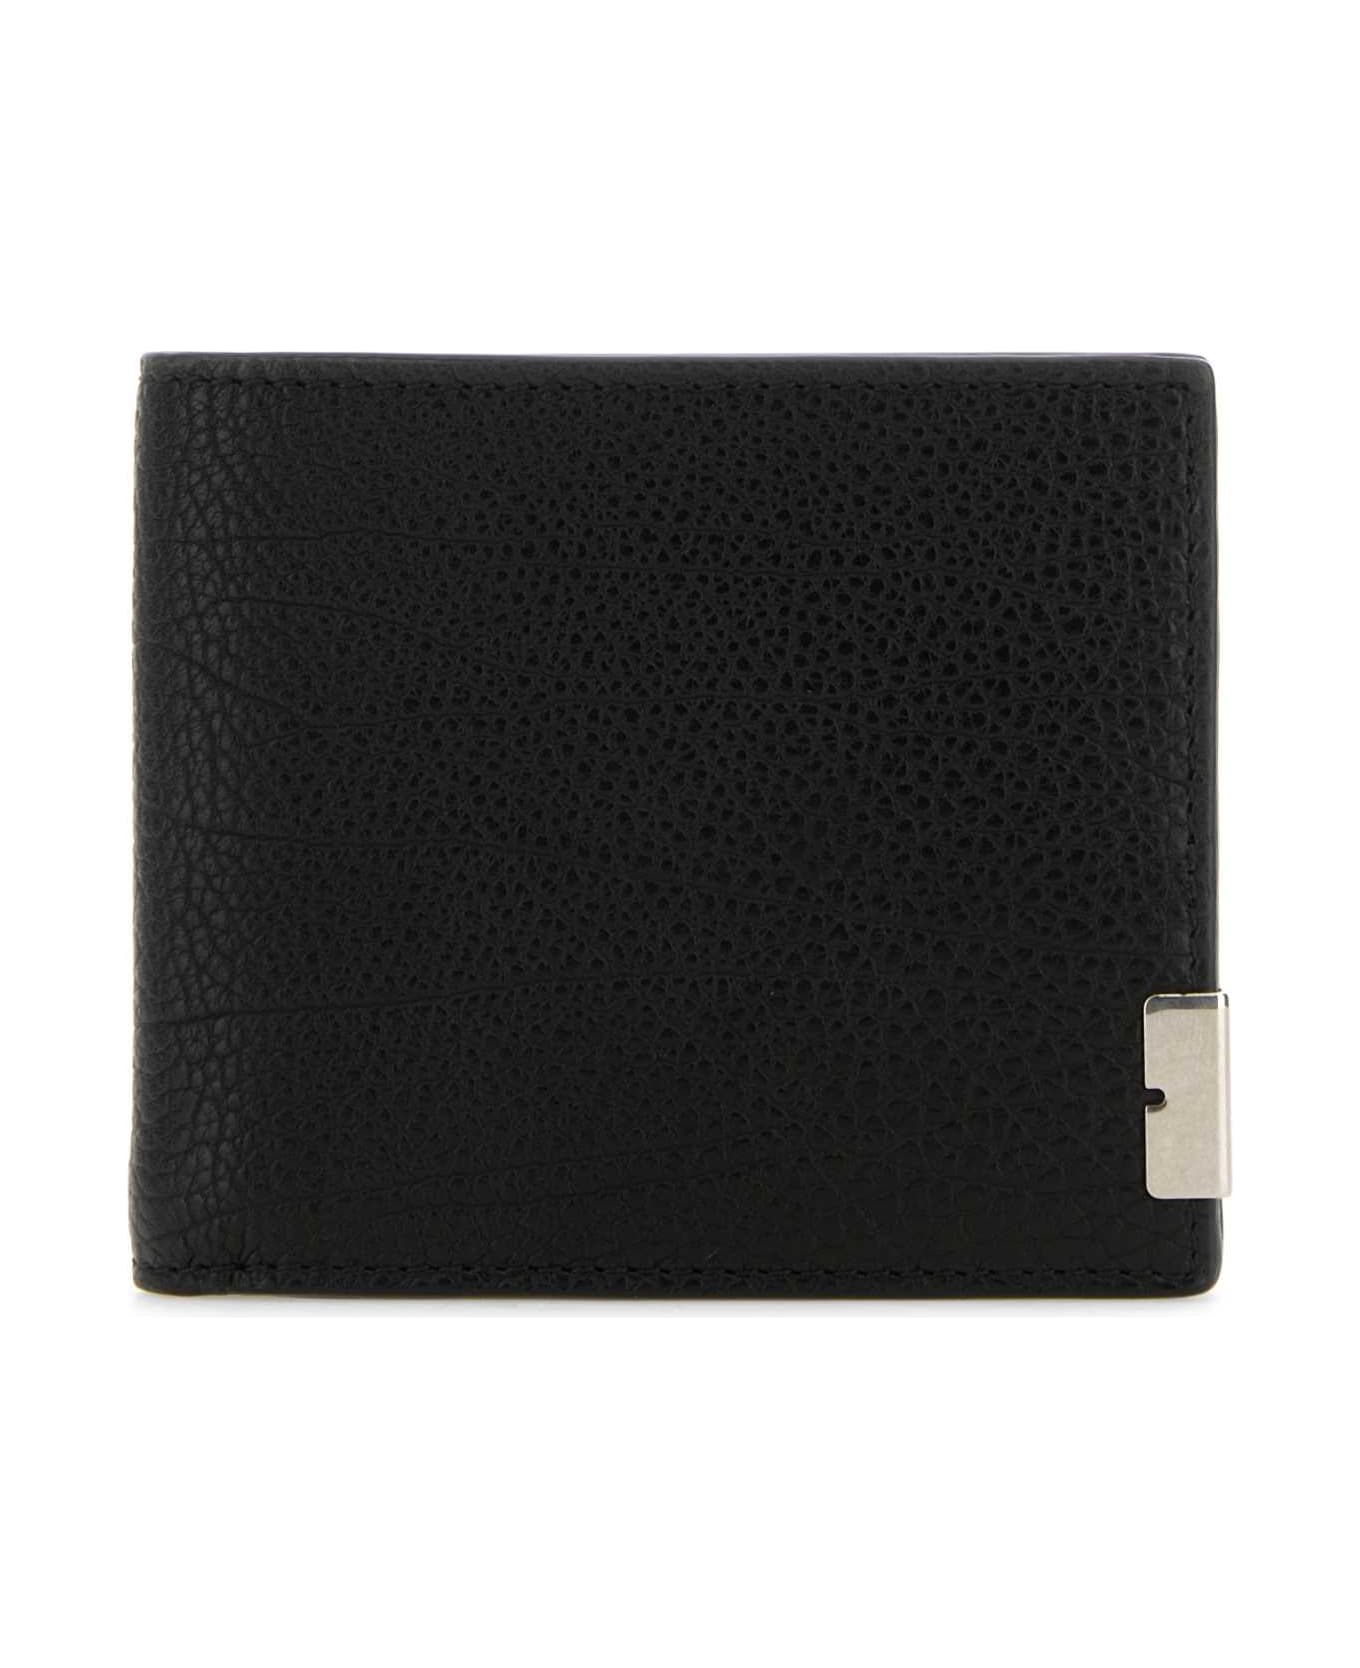 Burberry Black Leather B Cut Wallet - BLACK